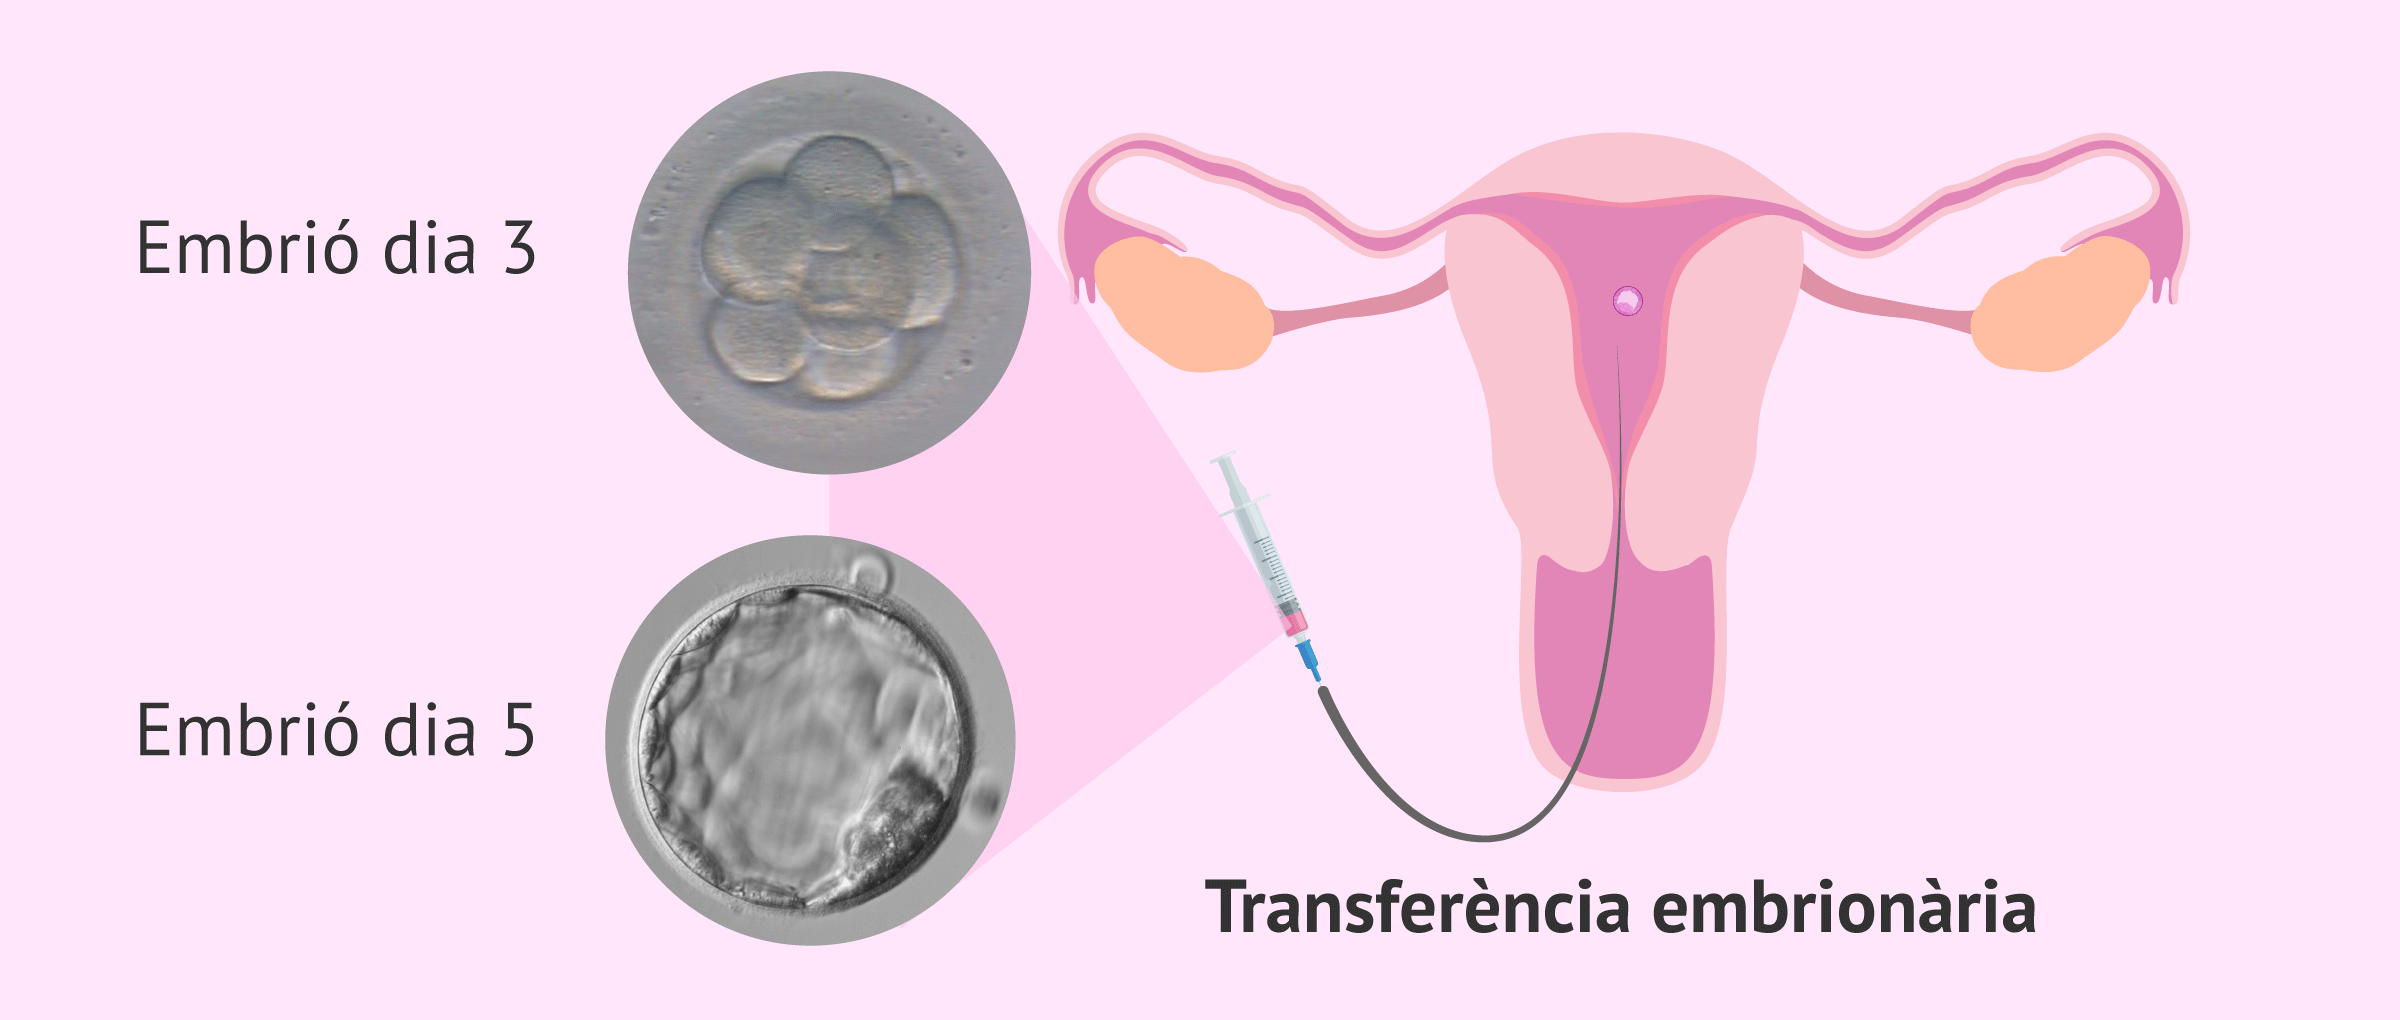 Transferència d'embrions a l'úter matern